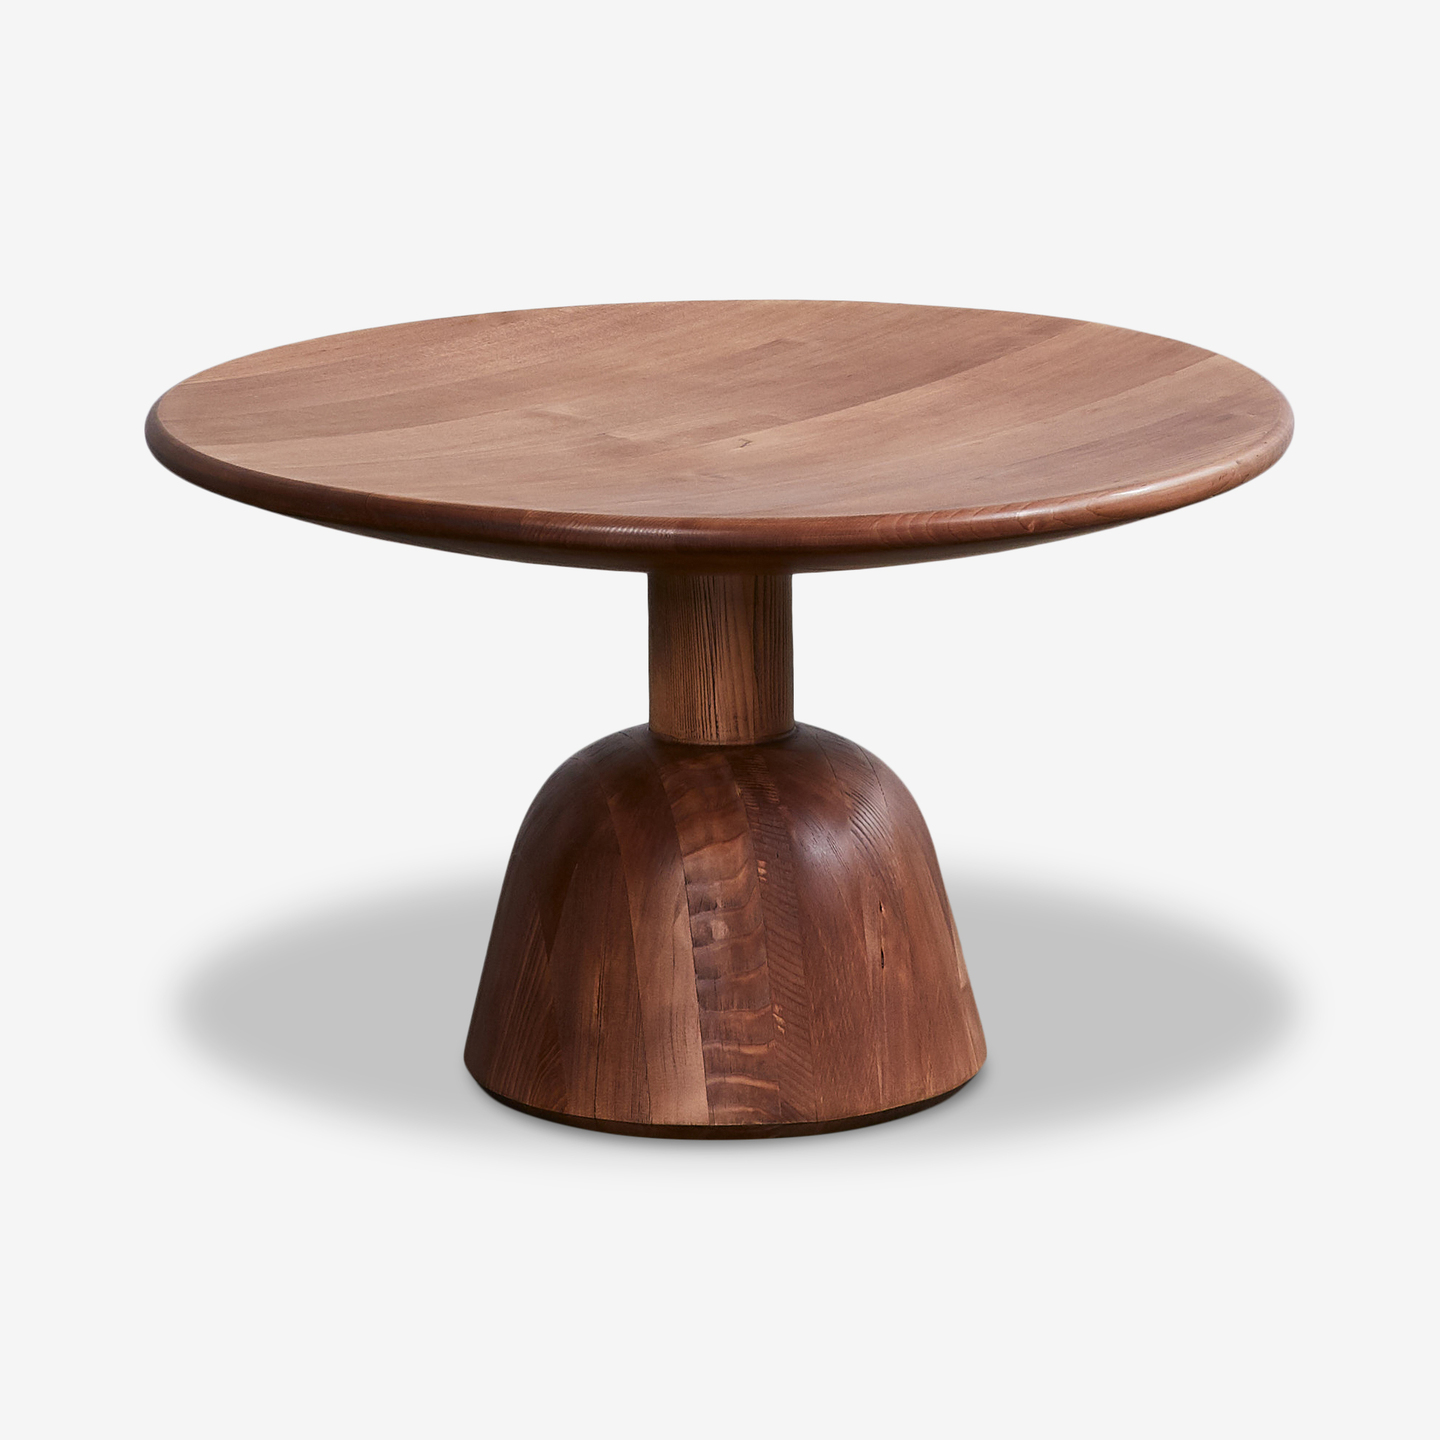 672_Macbeth-Hemlock-Natural-Wood-Coffee-Table-_Right-3Q_Industrial_Living-Room-4 2020